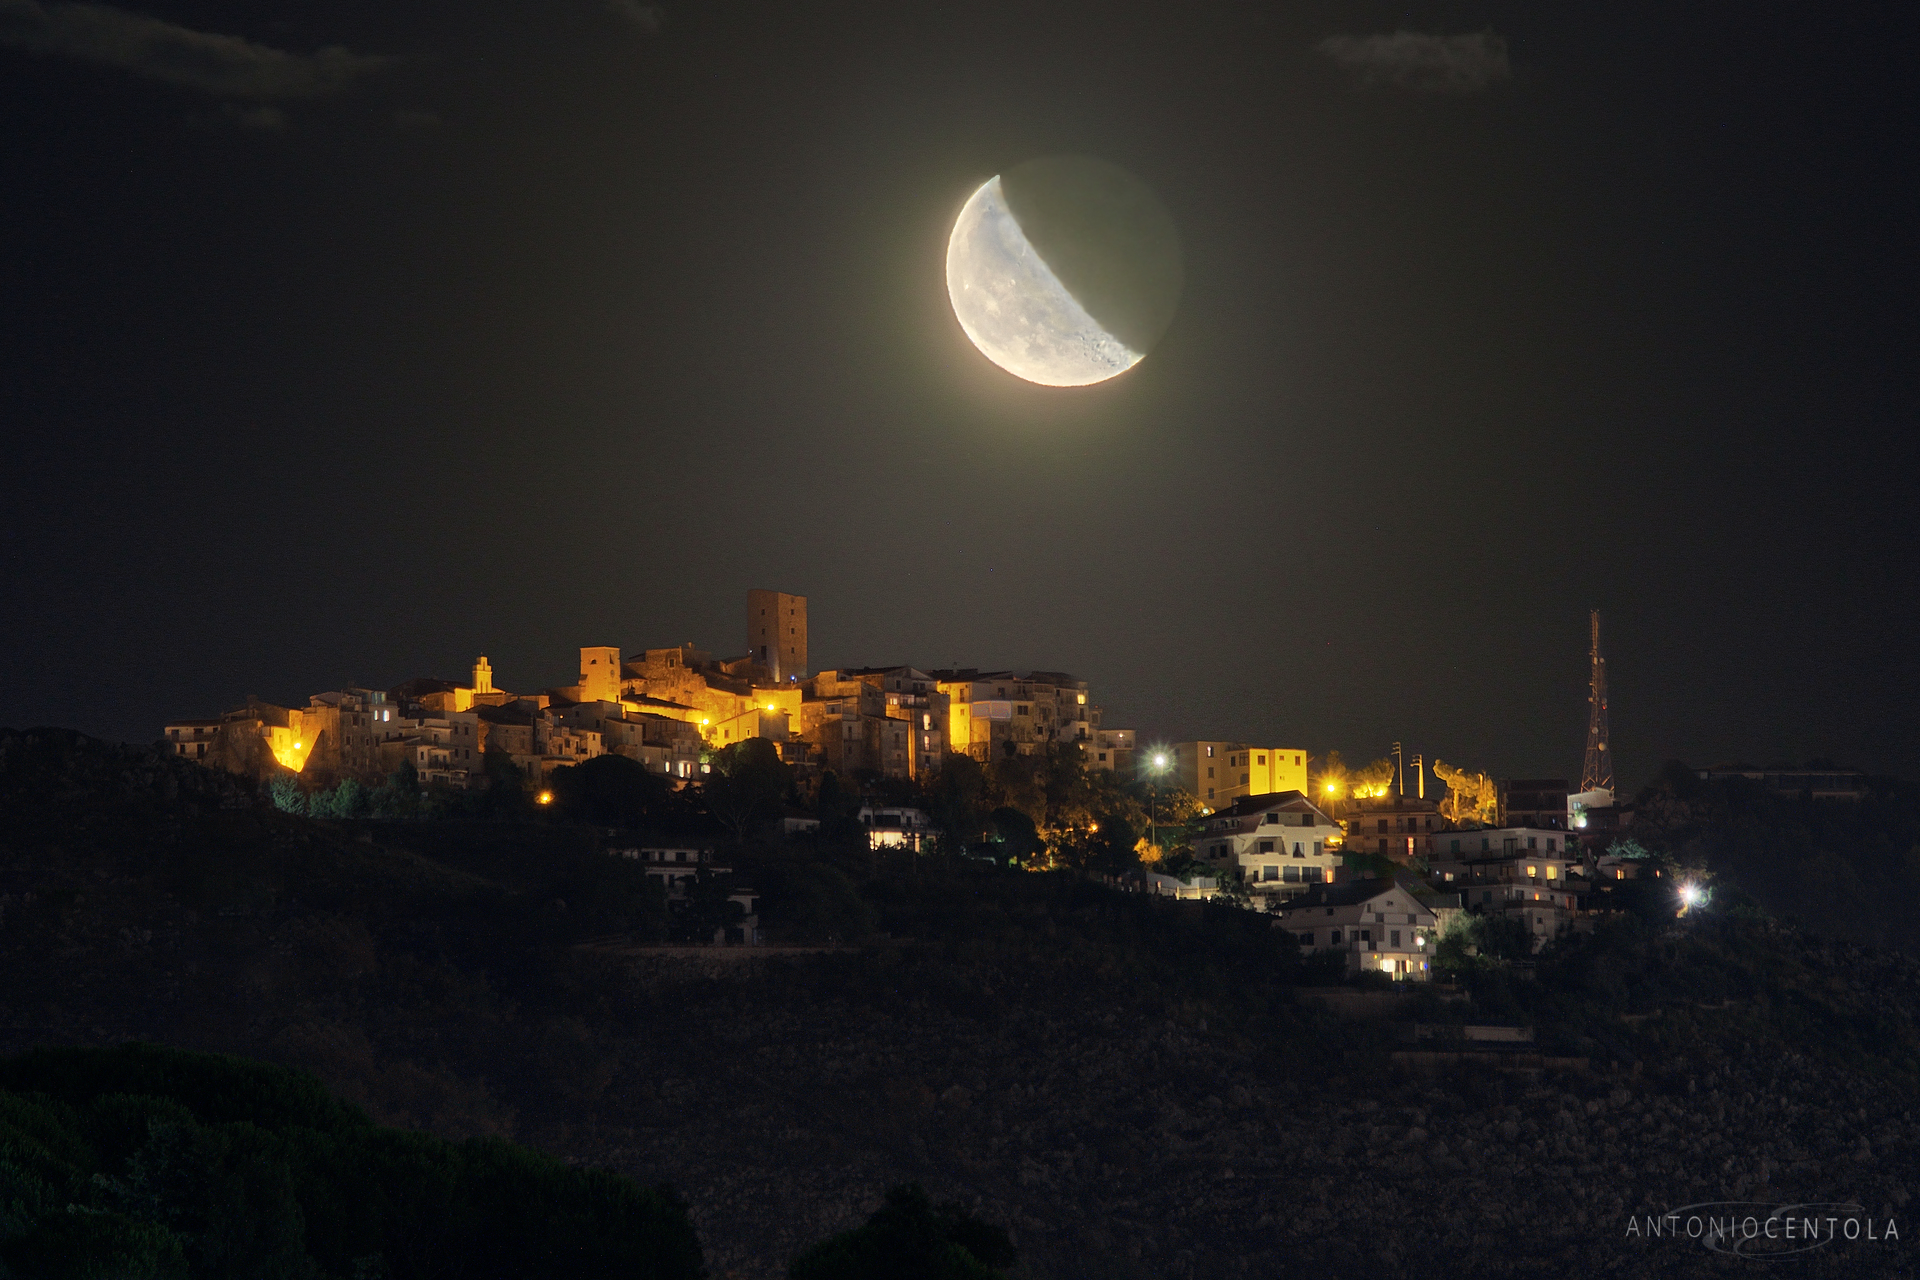 Castellonorato by night...